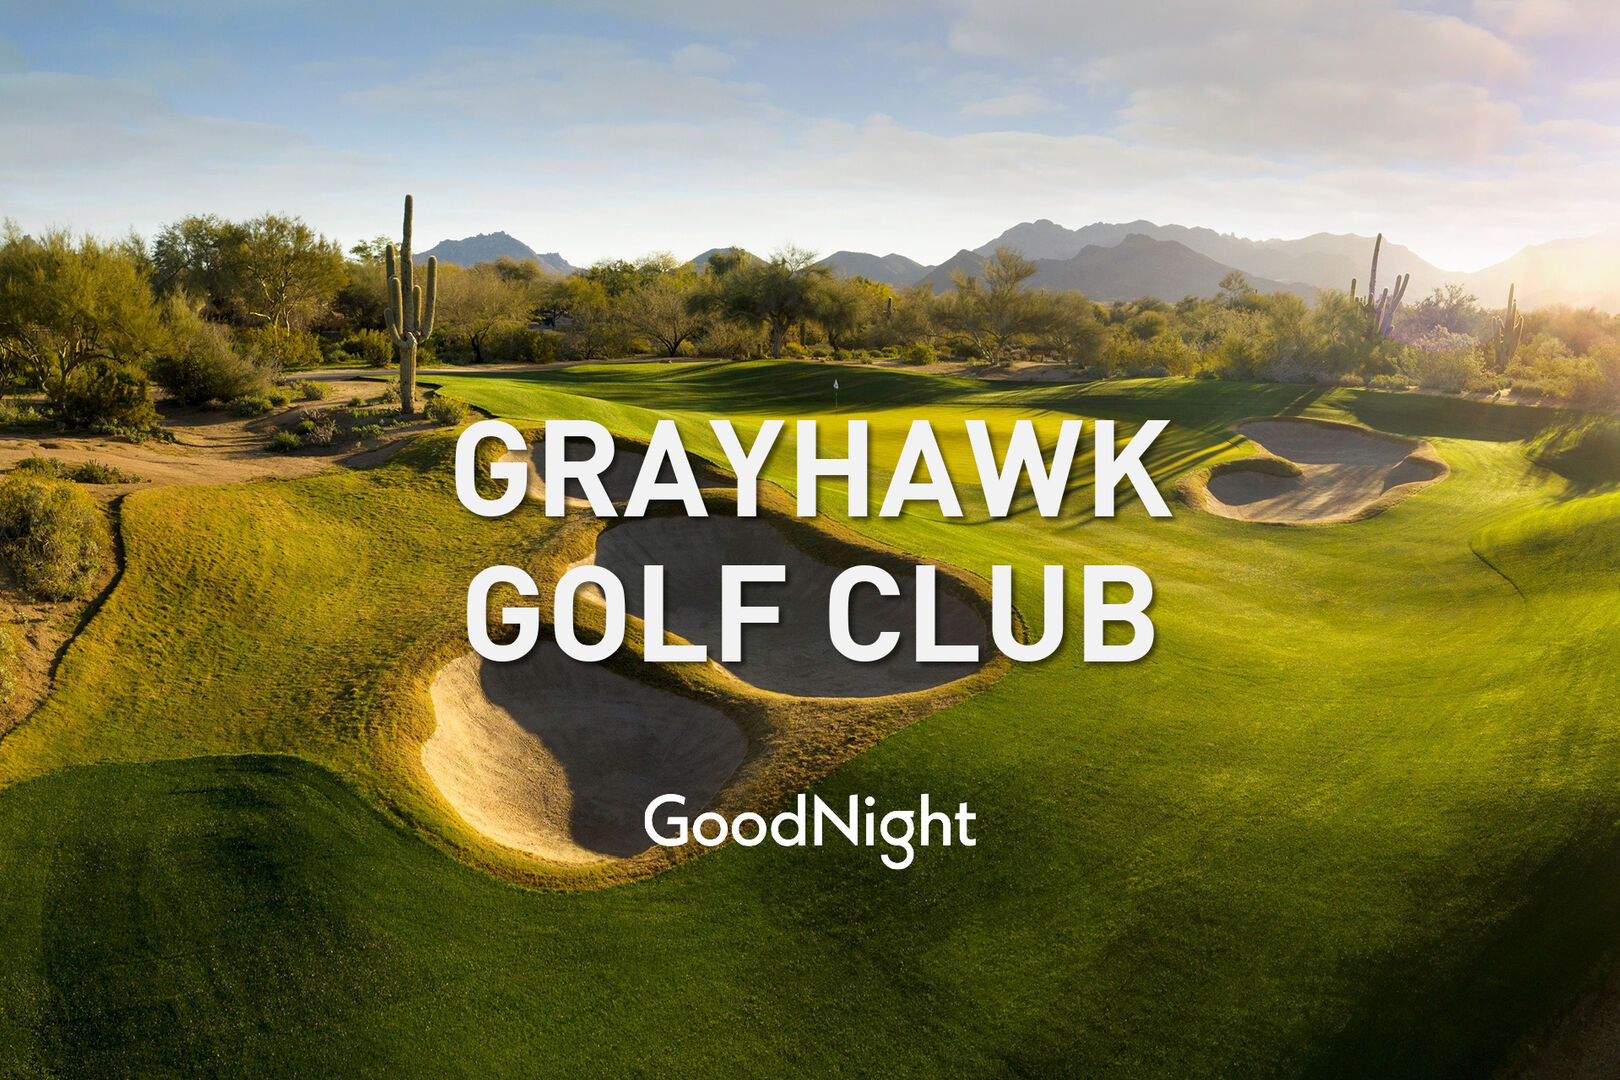 8 mins: Grayhawk Golf Club